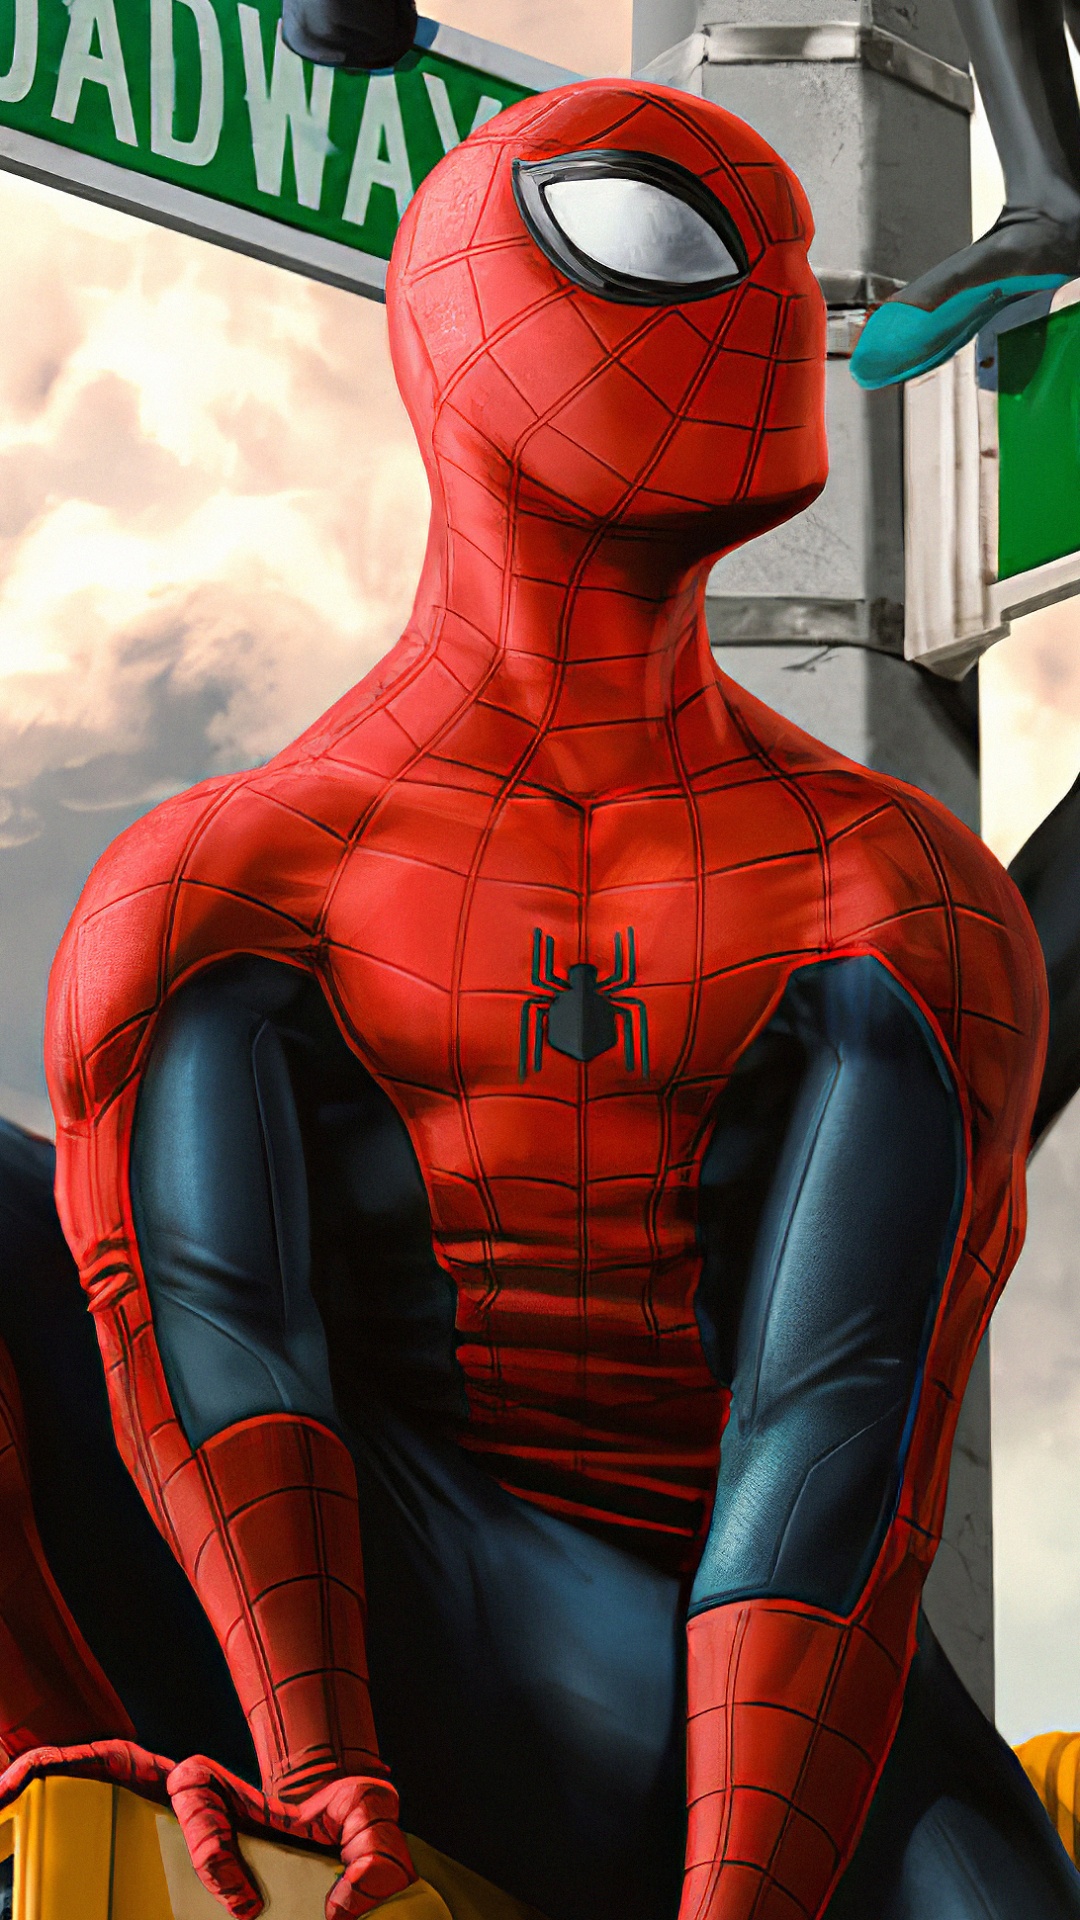 Spider-man, 里*莫拉莱斯, 惊奇漫画, 超级英雄, 英雄 壁纸 1080x1920 允许